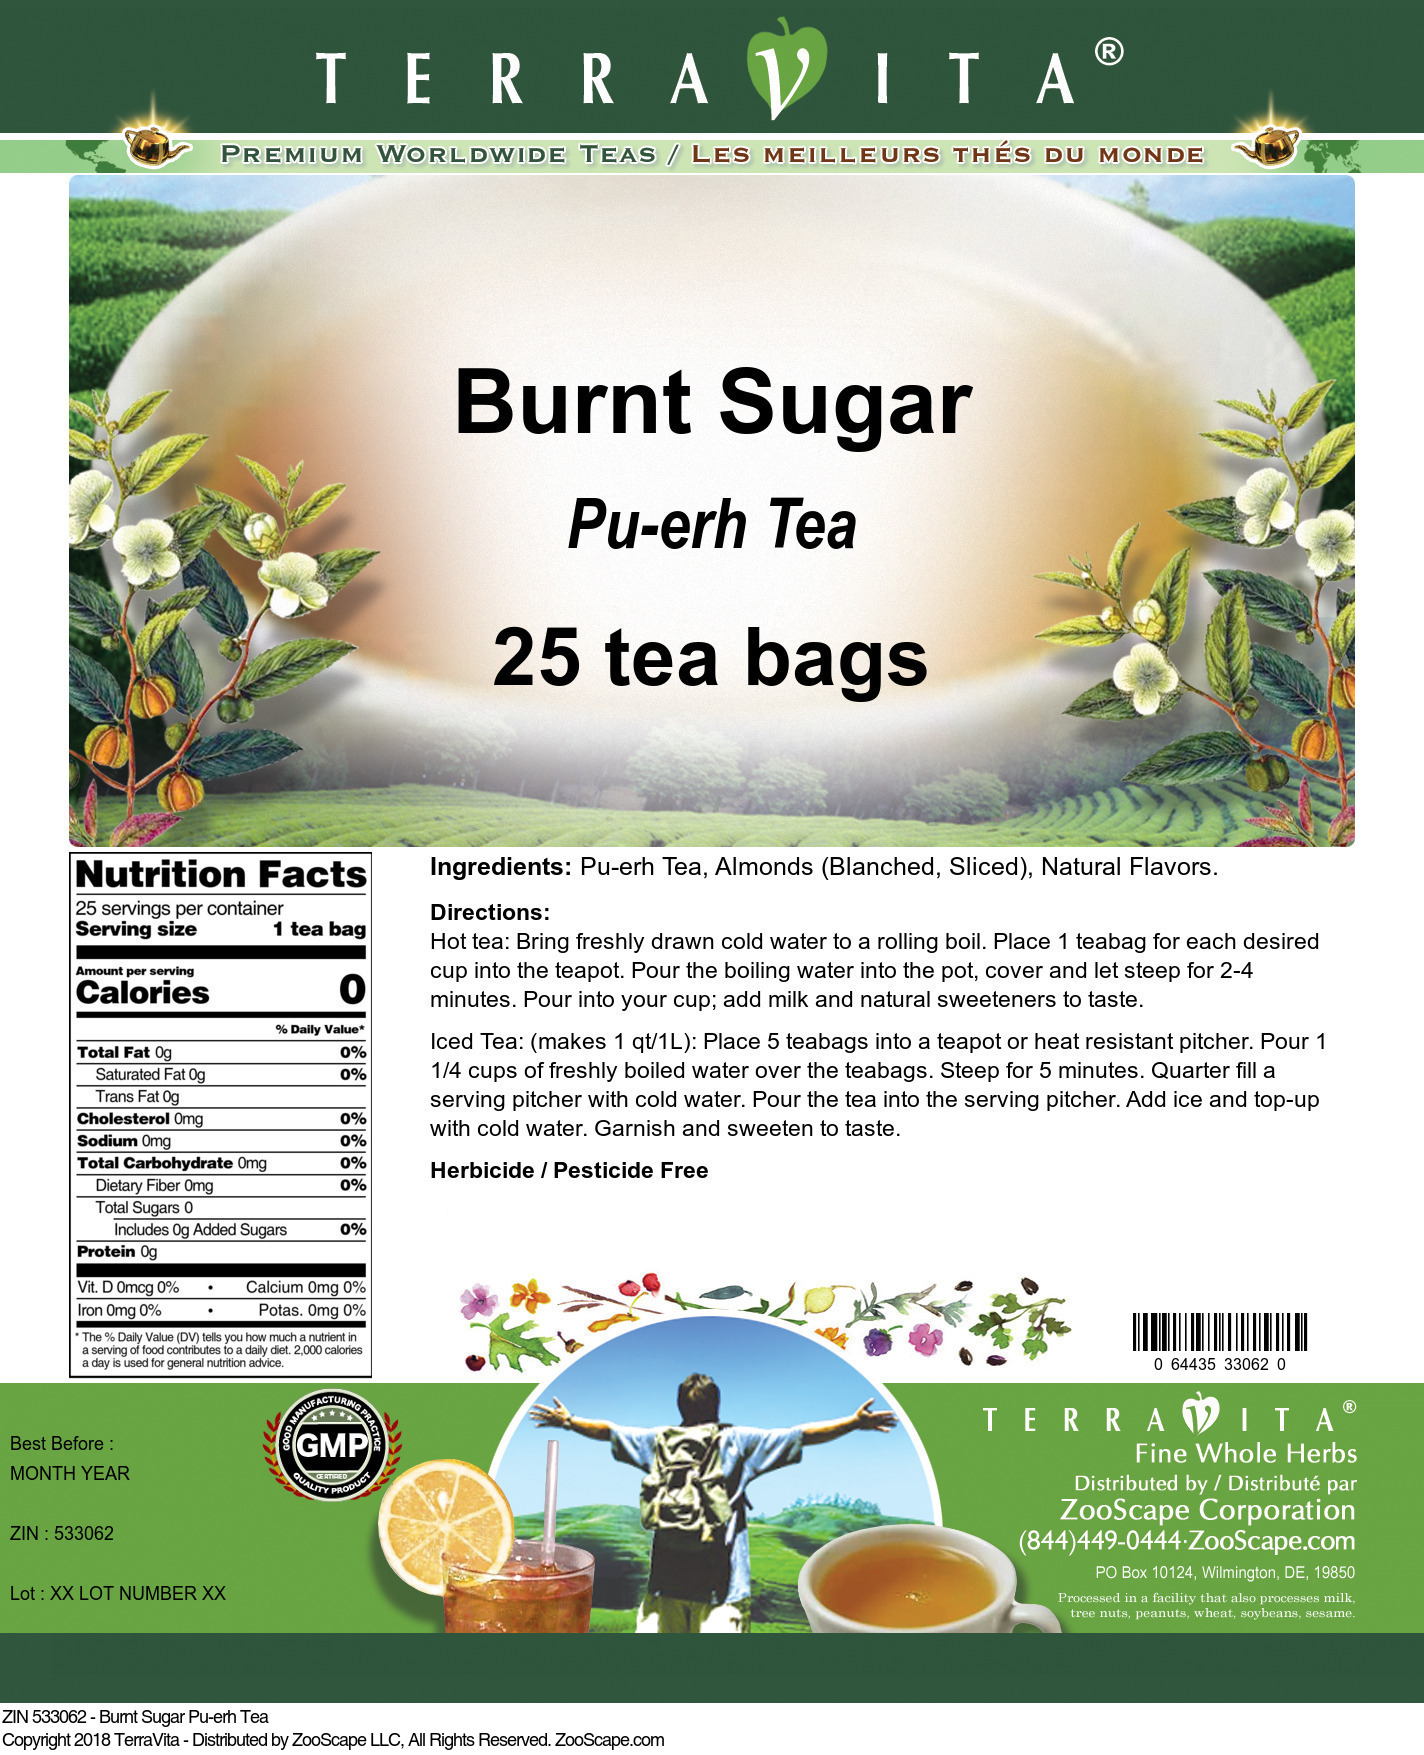 Burnt Sugar Pu-erh Tea - Label